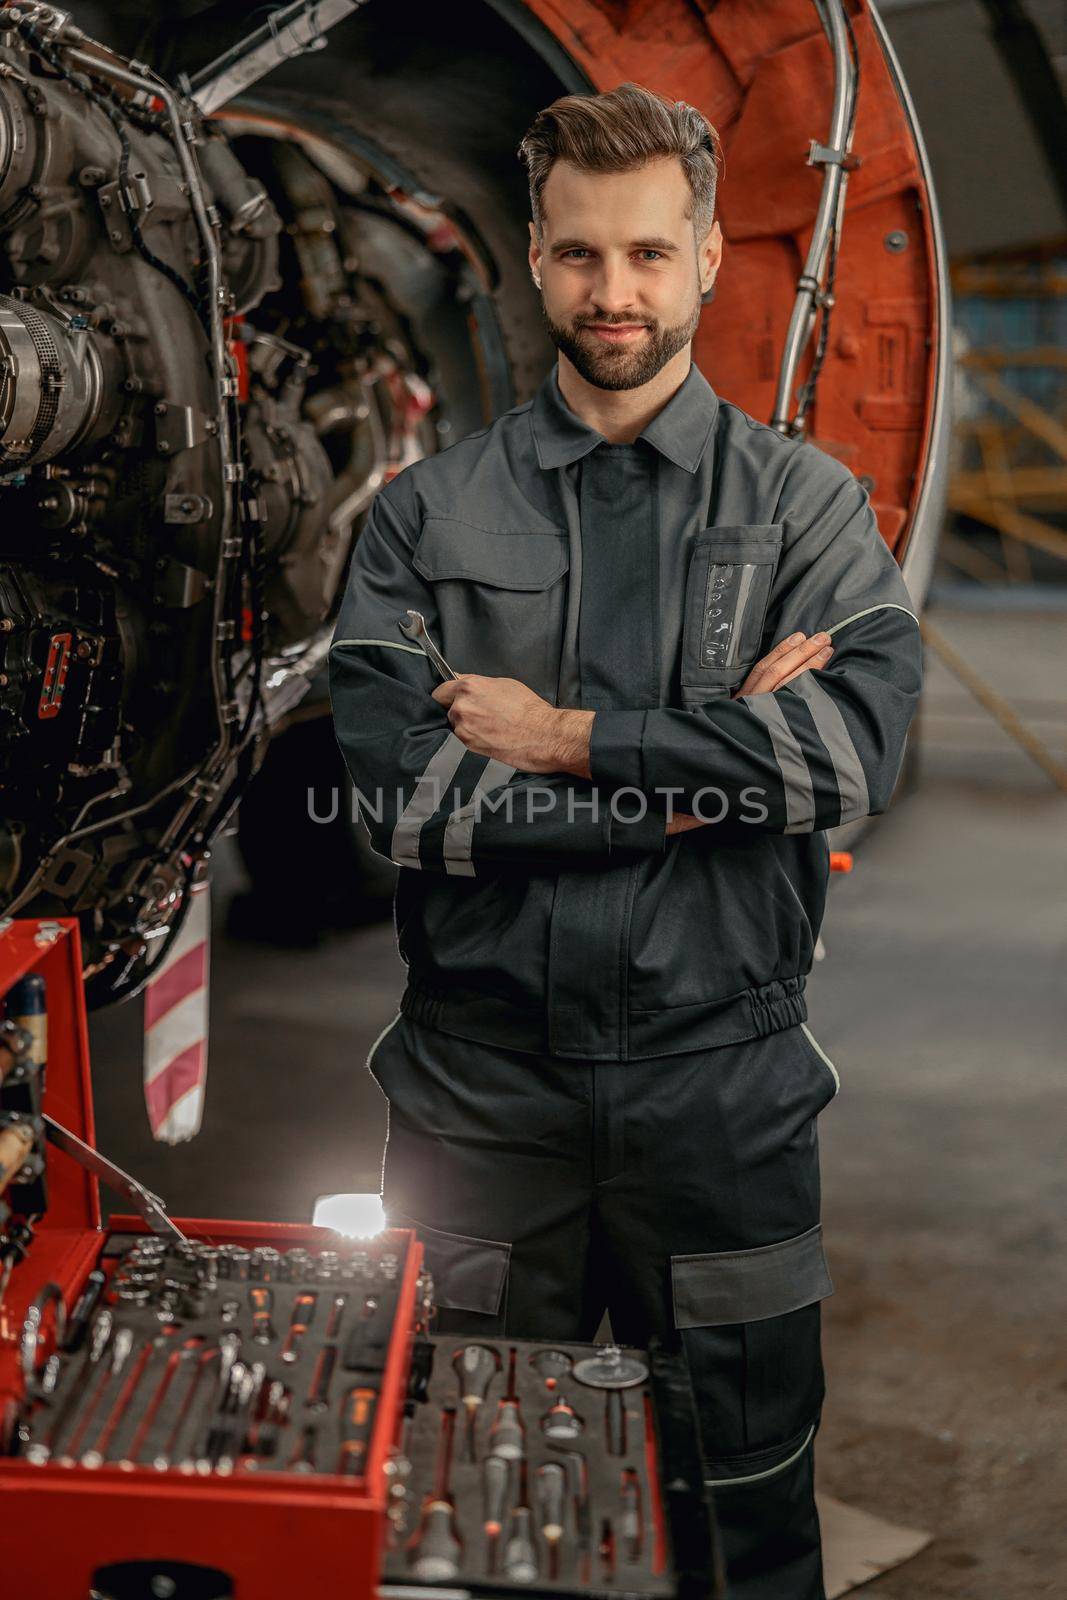 Male aircraft mechanic standing near tool box in hangar by Yaroslav_astakhov